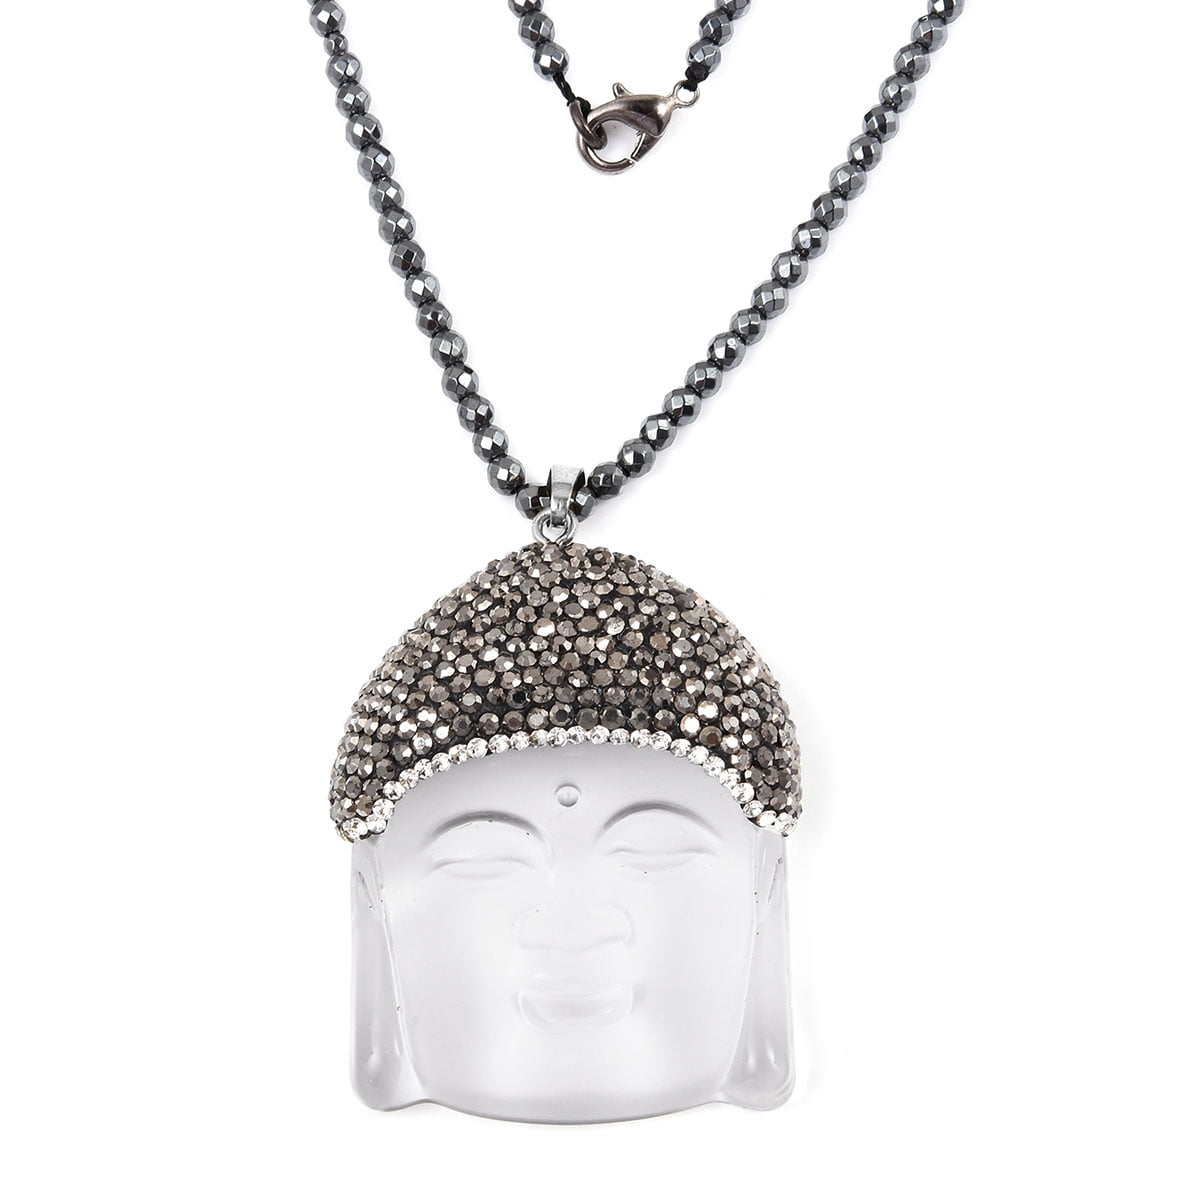 Solid Sterling Buddha Pendant India Buddha Charm Sterling Silver Buddha Charm for Charm Bracelets Vintage Charm